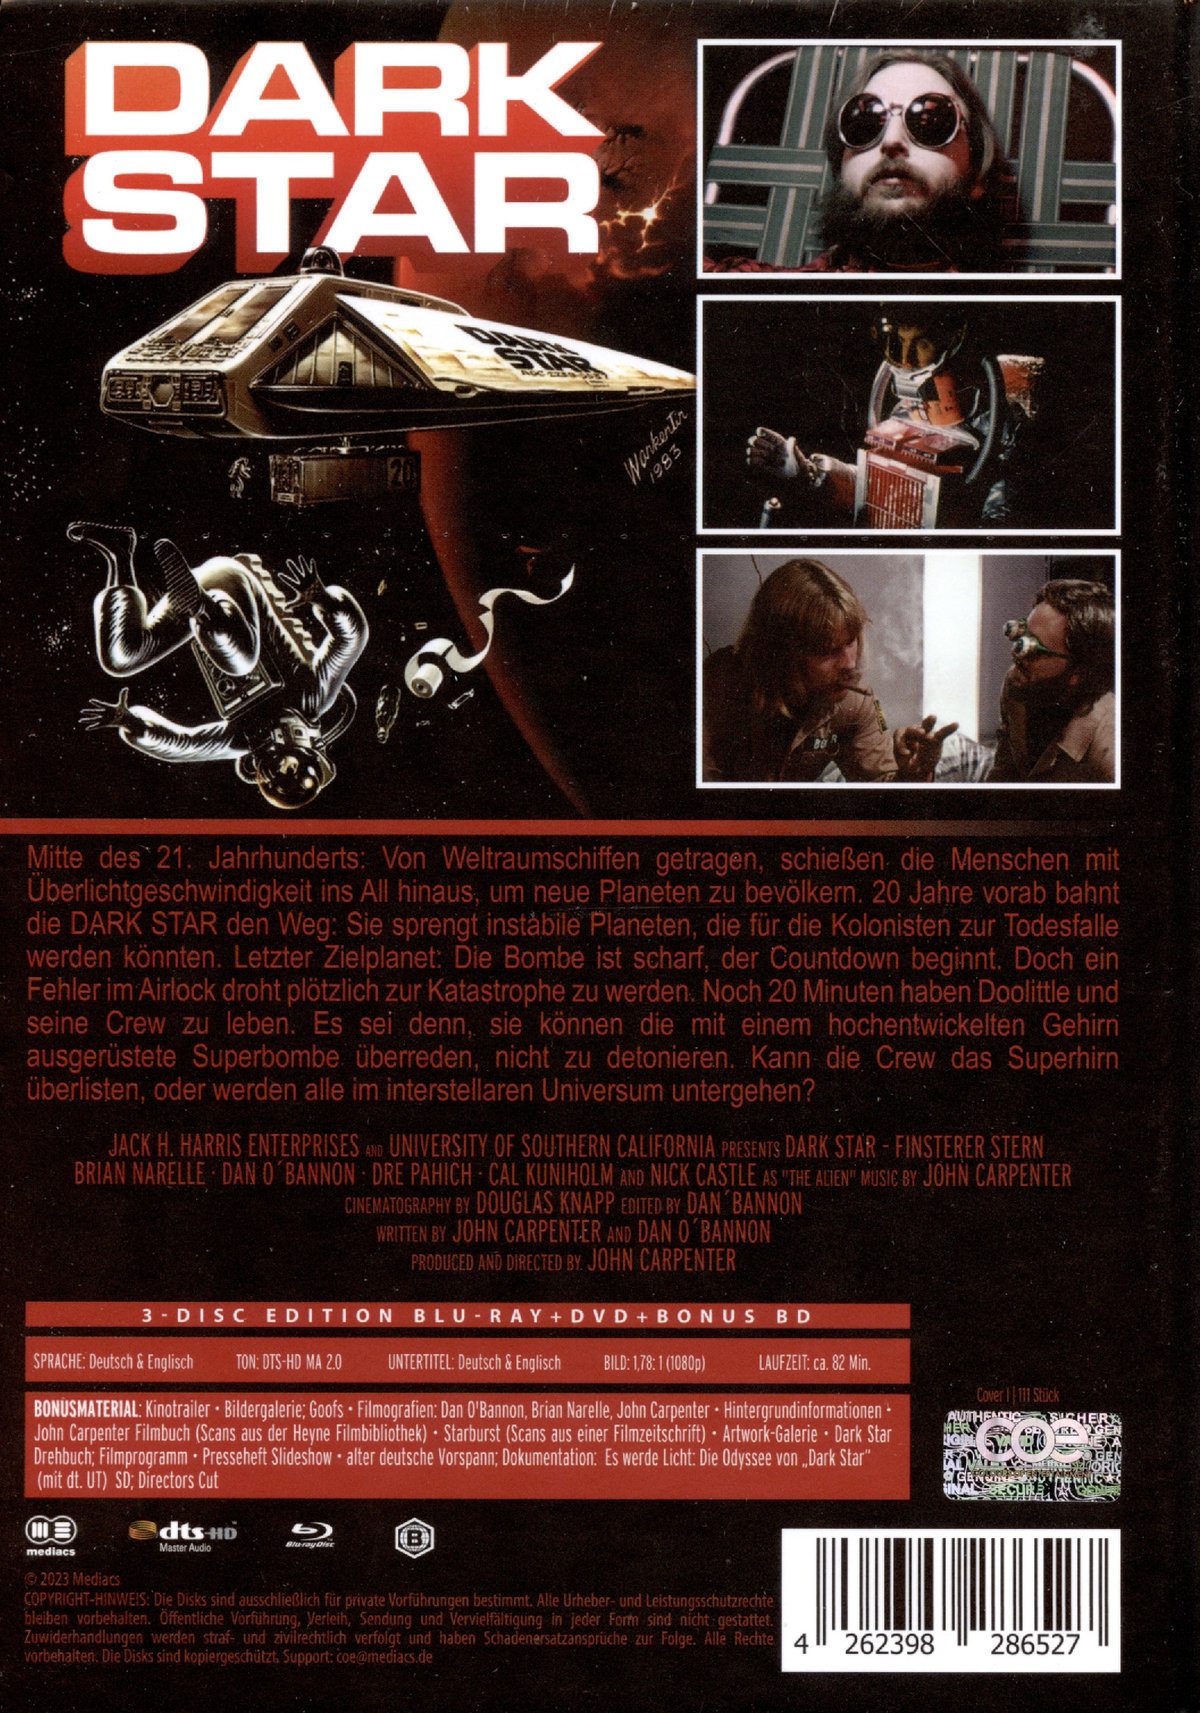 Dark Star - Uncut Mediabook Edition (DVD+blu-ray) (I) 